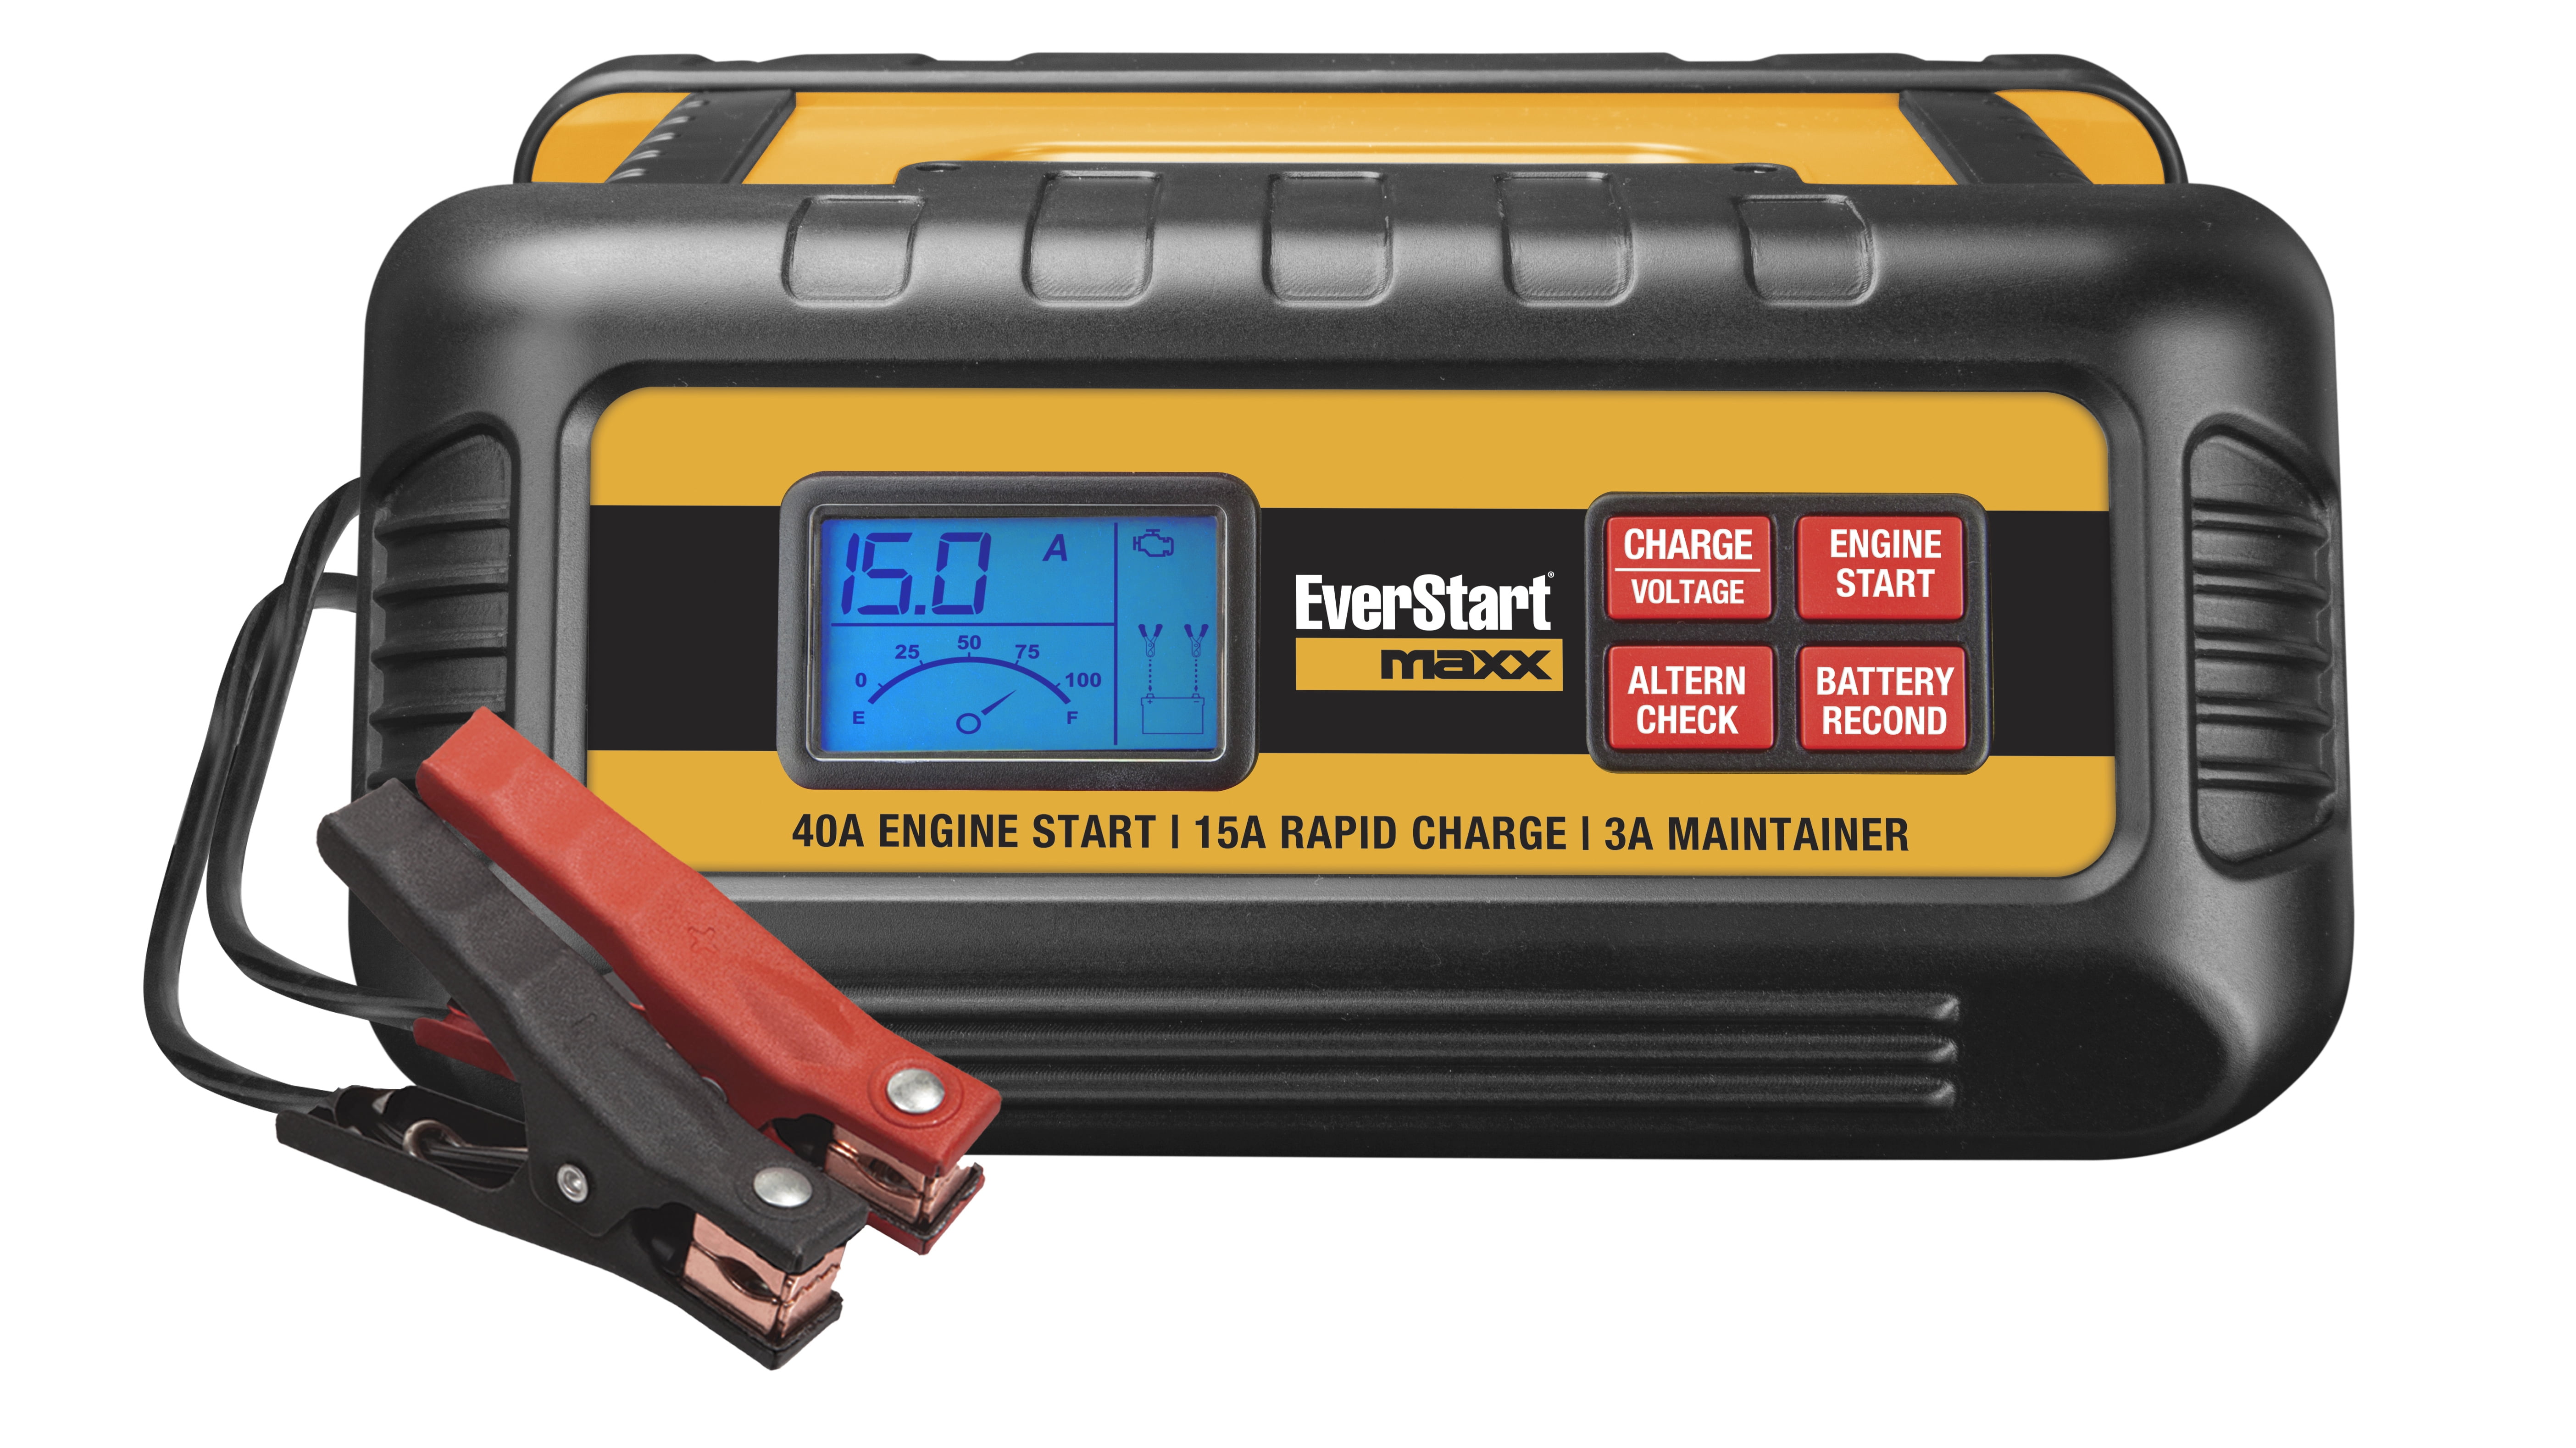 everstart-maxx-50-amp-battery-charger-manual-pdf